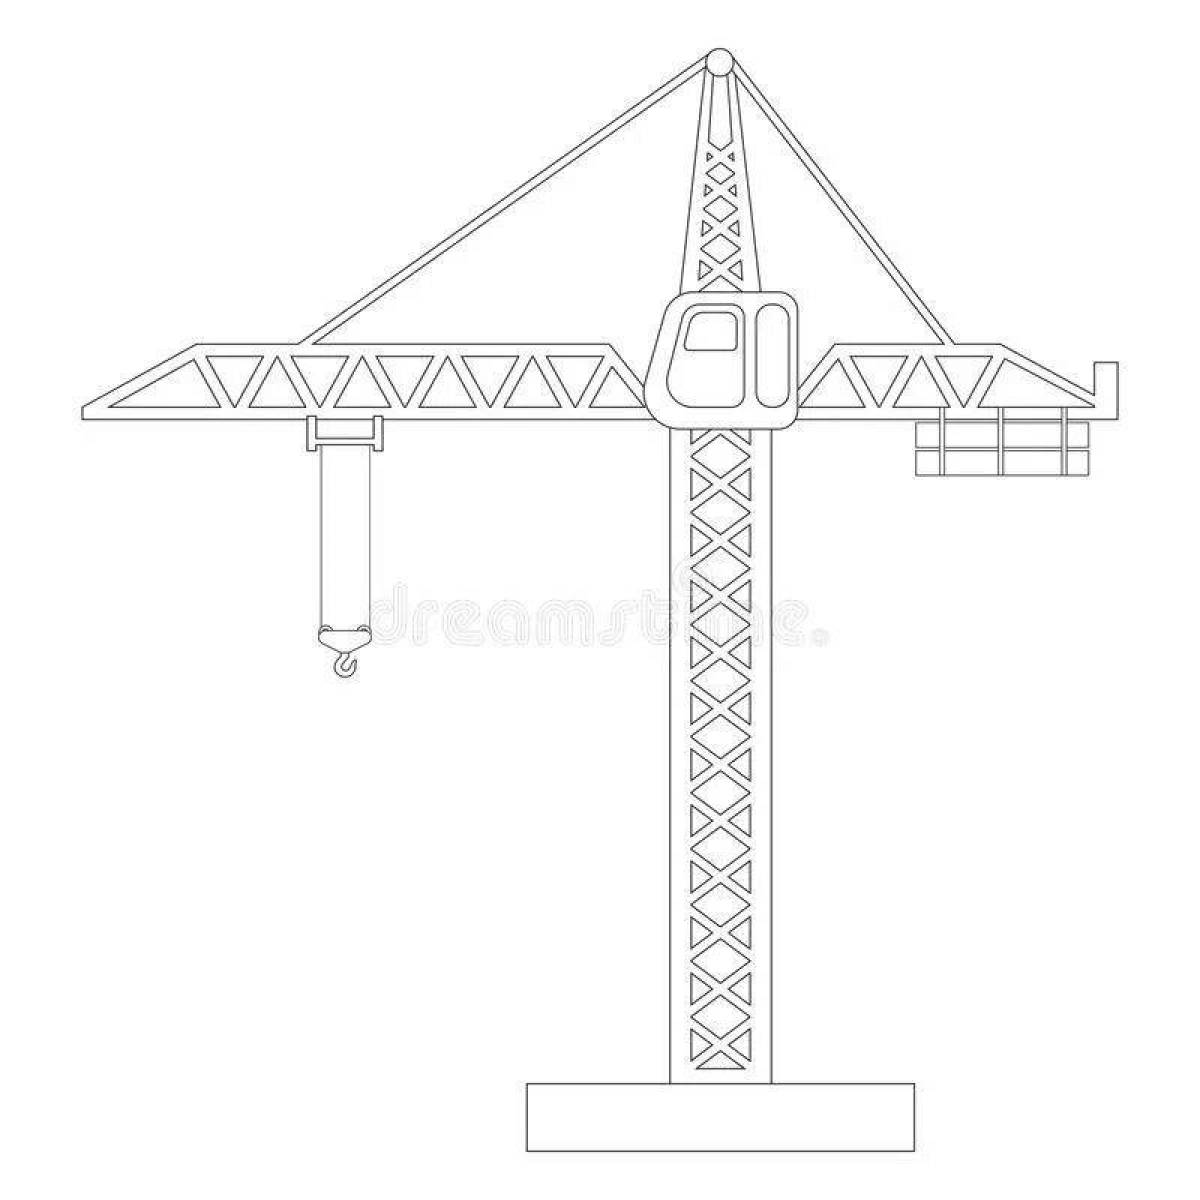 Tower crane #27